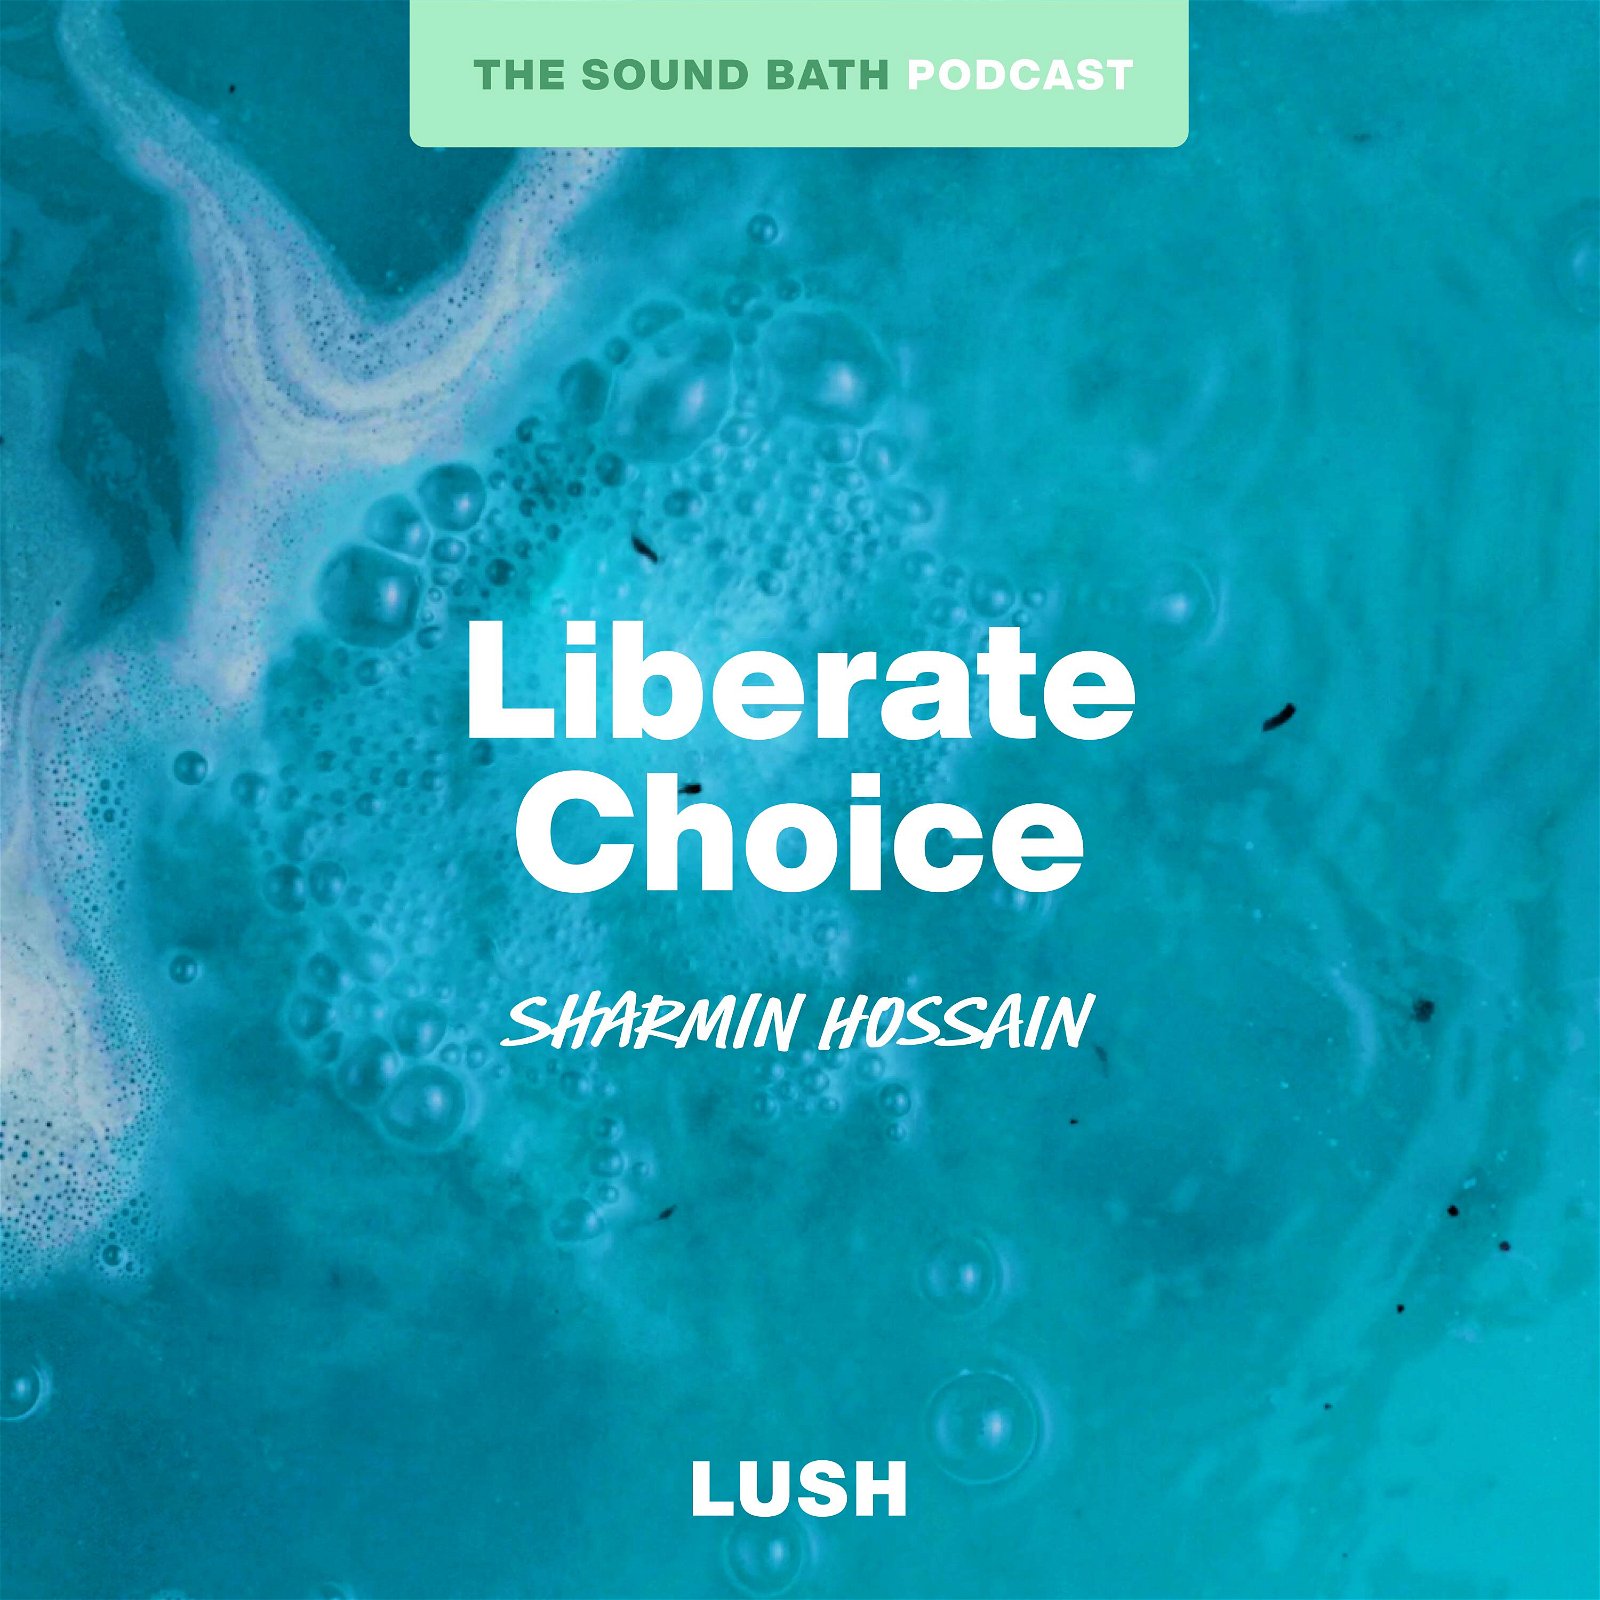 Sharmin Hossain - Liberate Choice